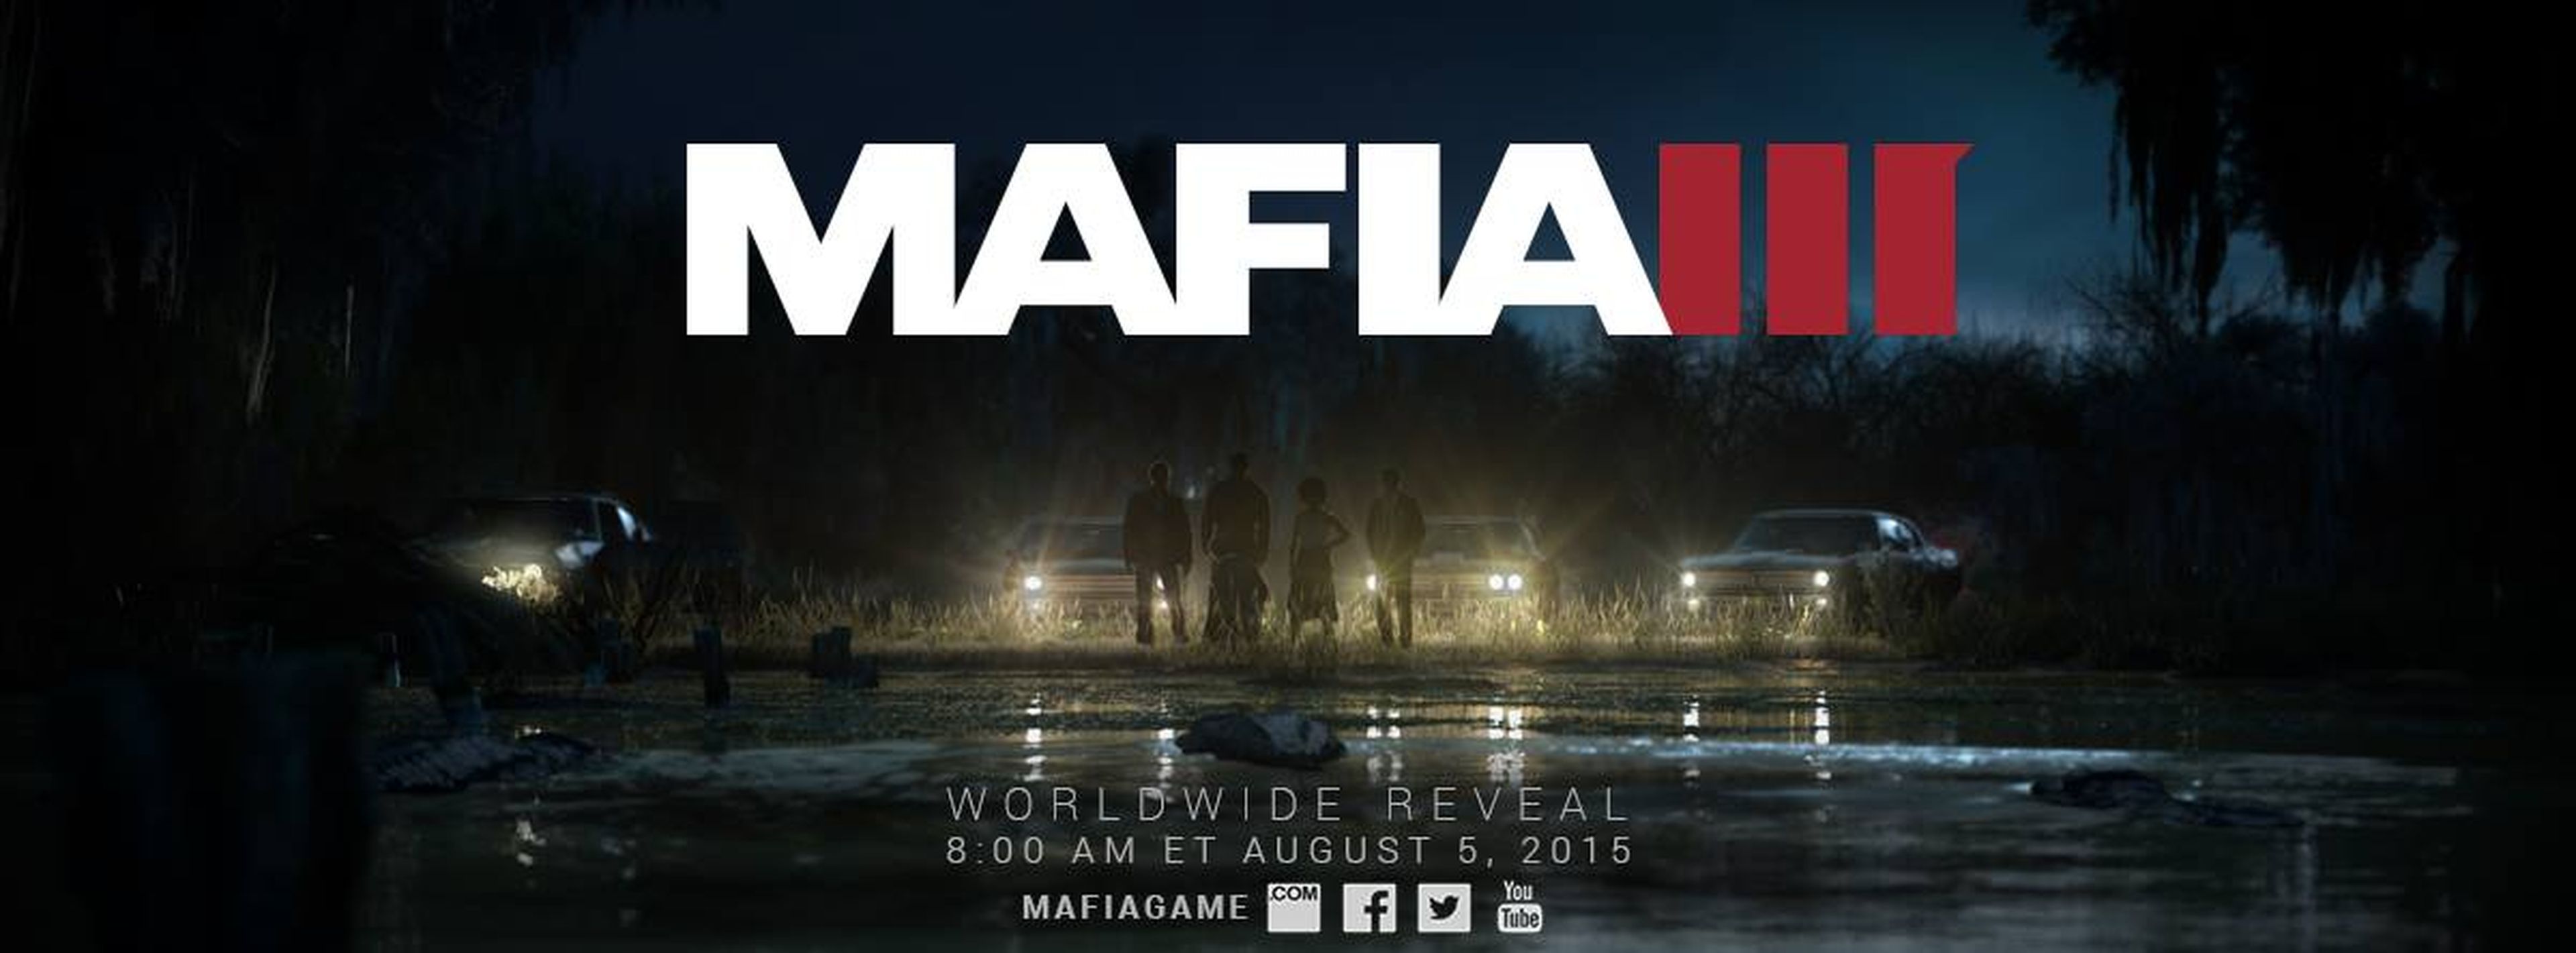 Mafia III se presentará en la Gamescom 2015